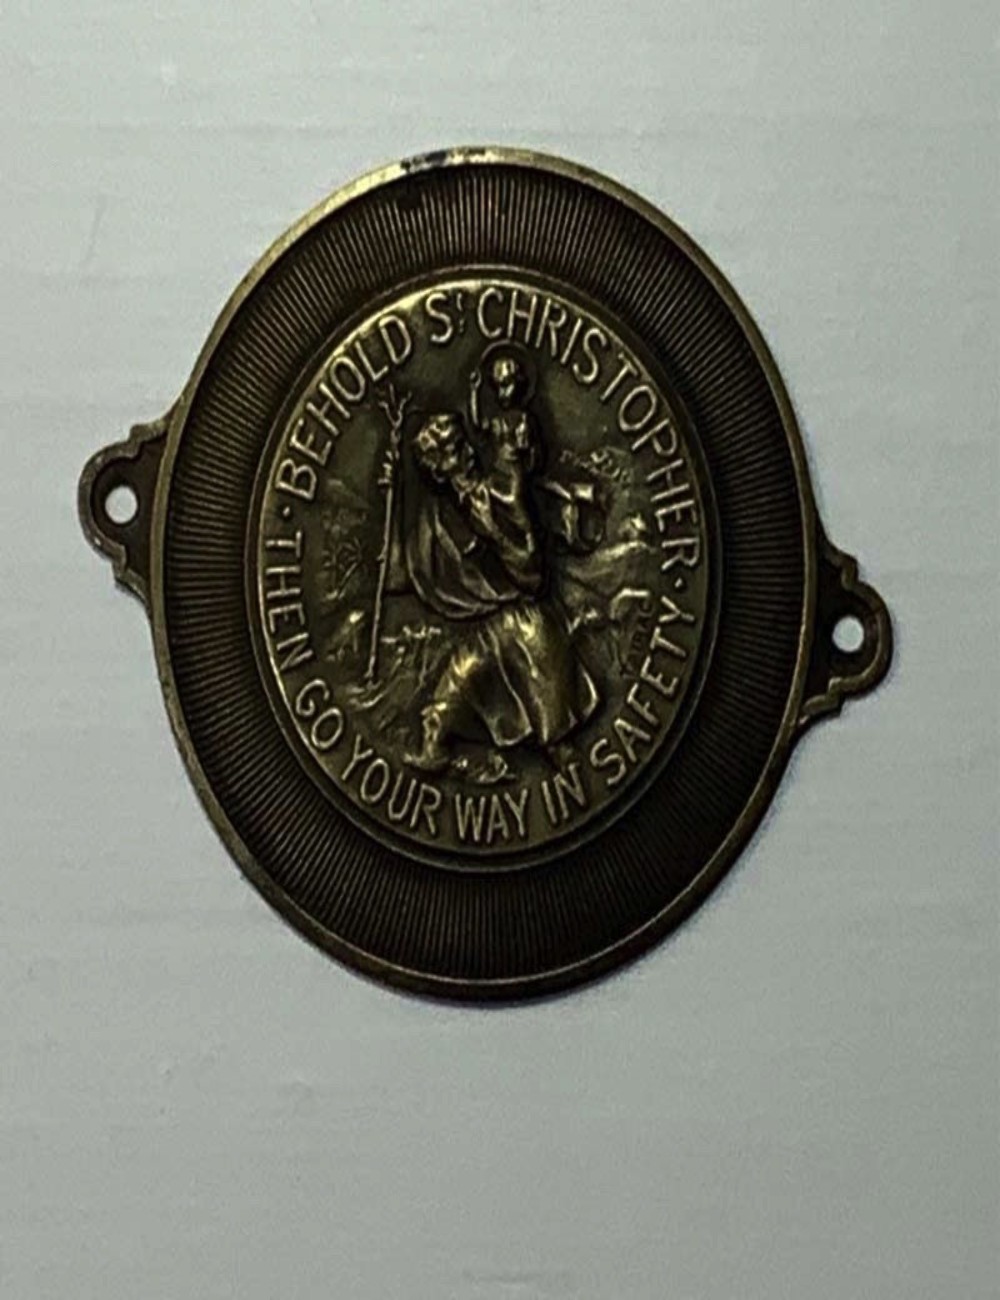 San Cristoforo plaque. Dimensions 6,6 cm x 5,3 cm